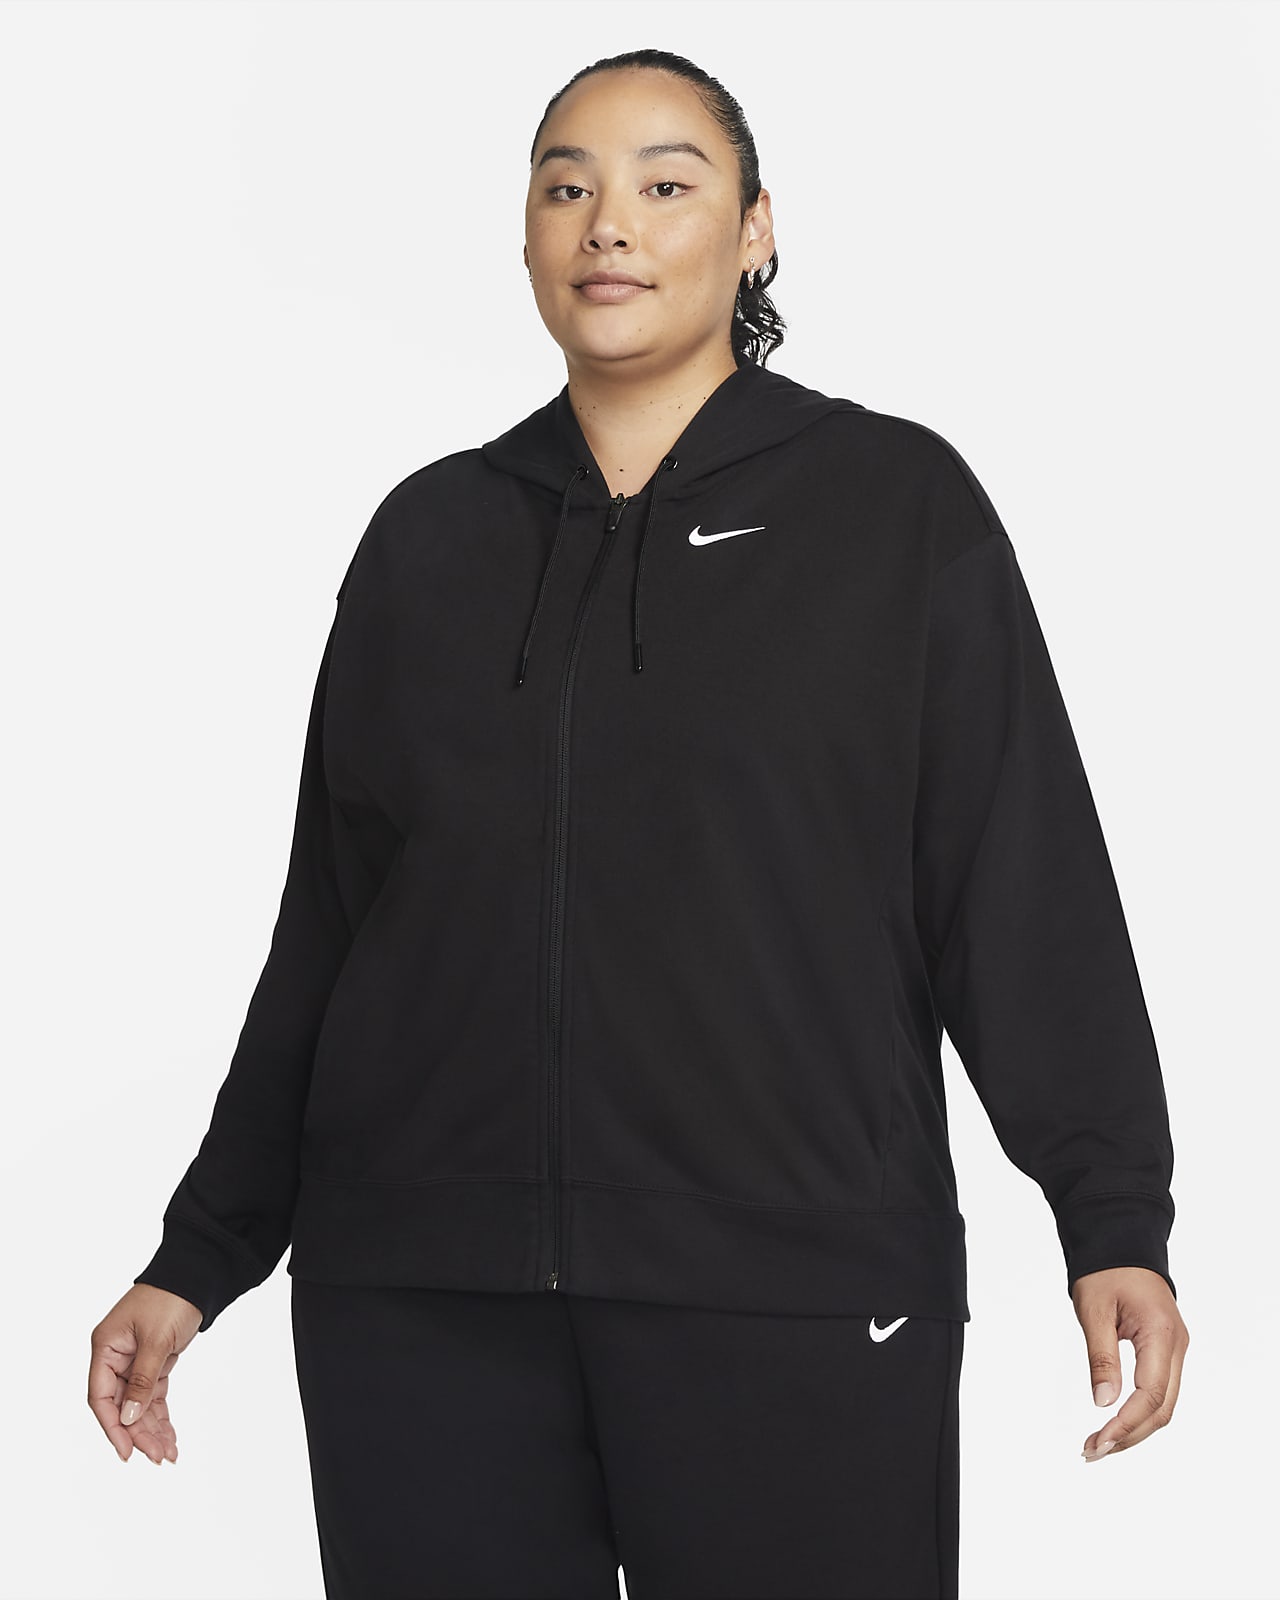 Decimal Kilimanjaro variable Nike Sportswear Women's Oversized Jersey Full-Zip Hoodie (Plus Size). Nike .com